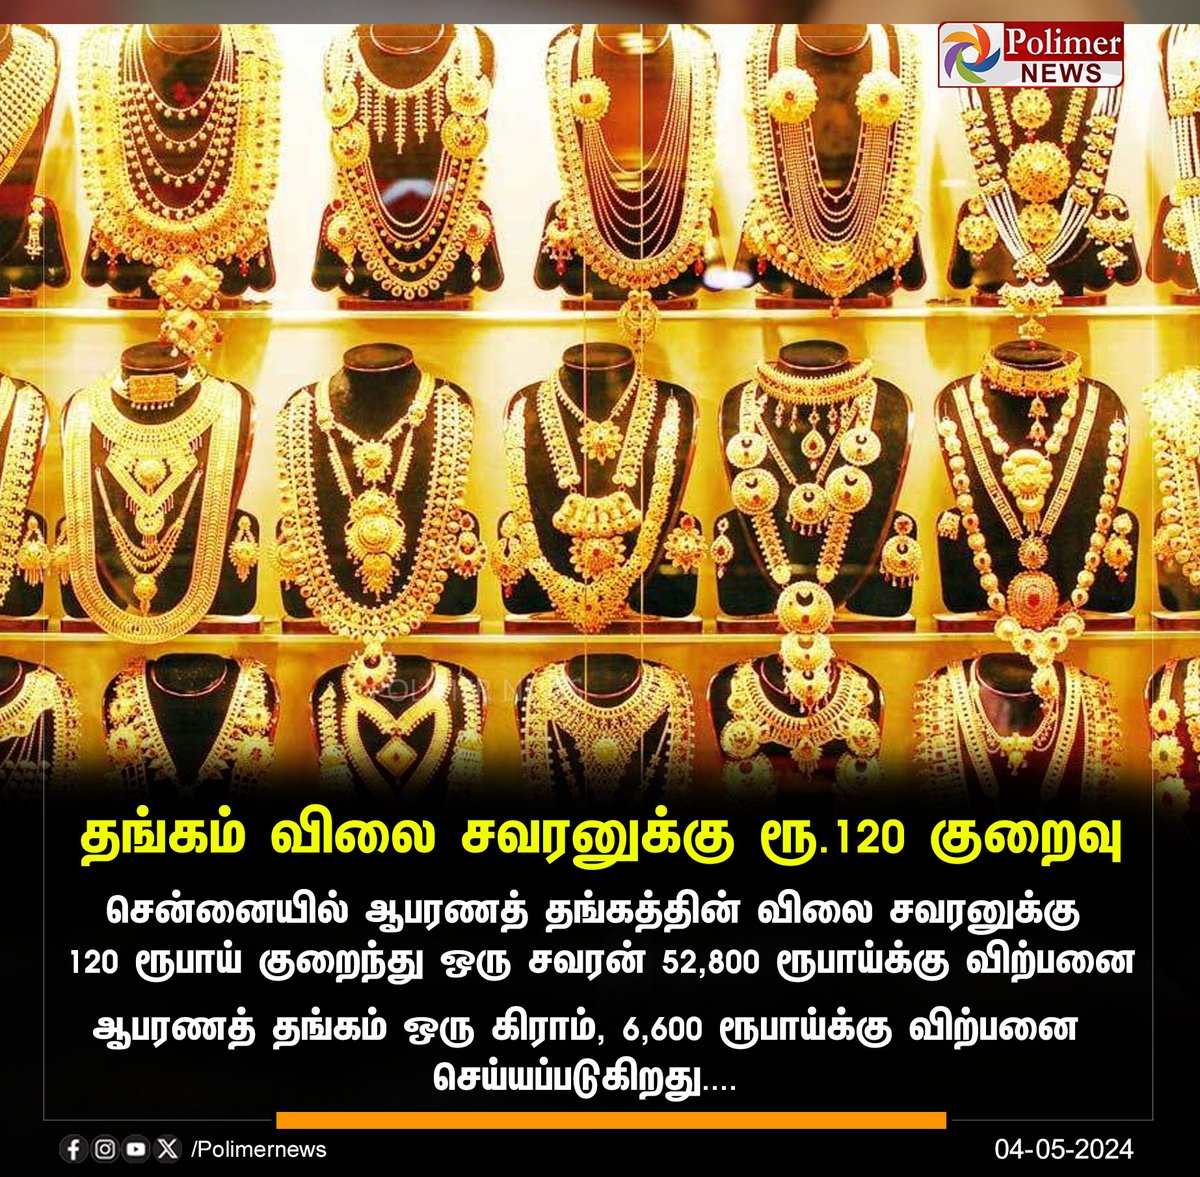 #JUSTIN || தங்கம் விலை சவரனுக்கு ரூ.120 குறைவு   | #Chennai | #GoldPrice | #GoldPriceHike | #PolimerNews